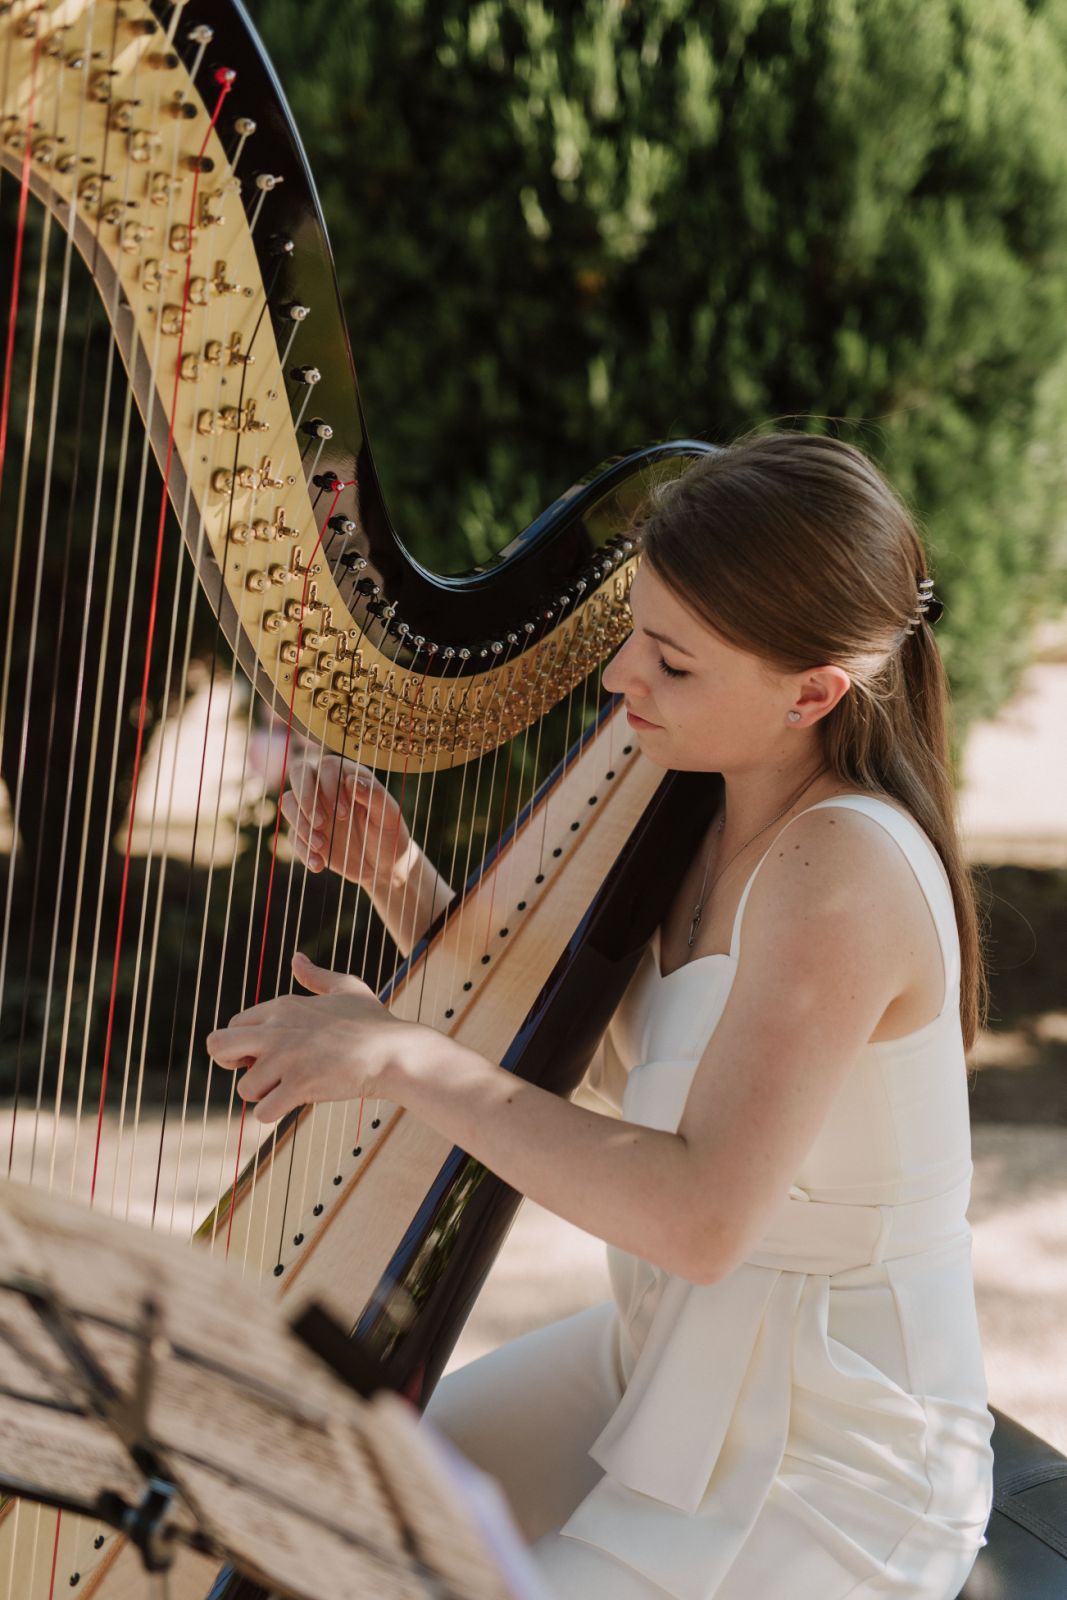 The Harp: history, prestige and present